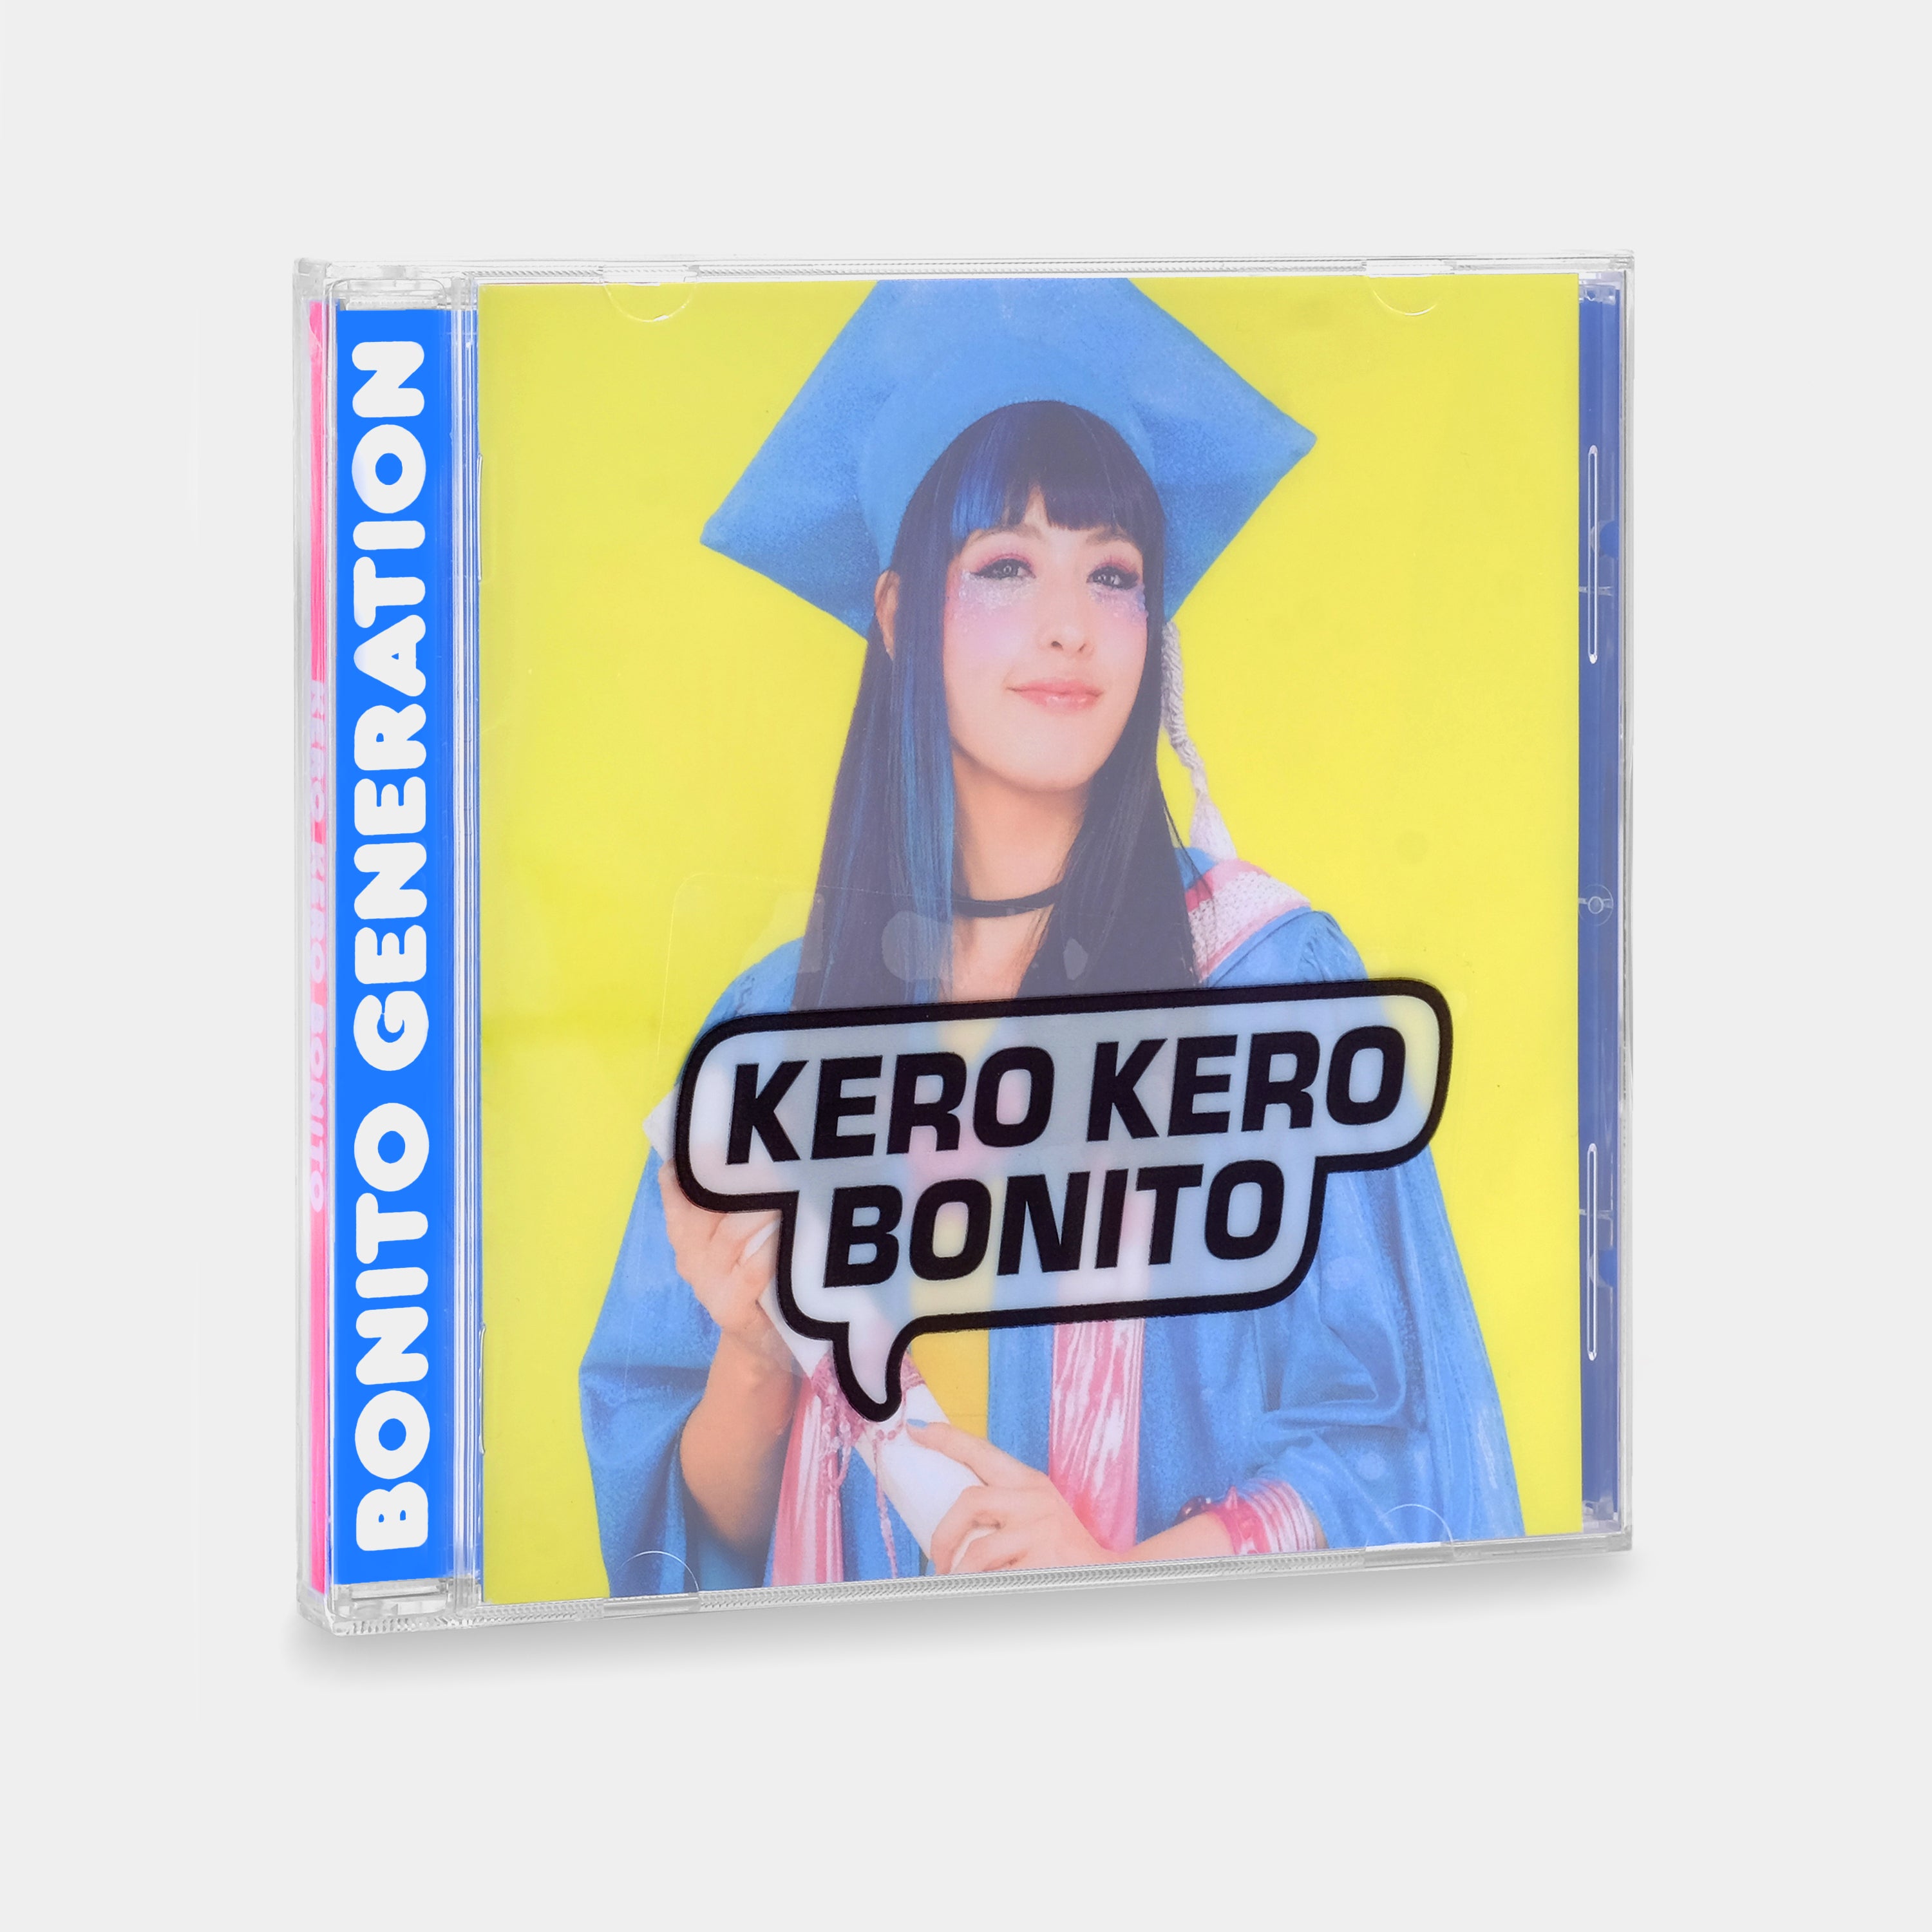 Kero Kero Bonito - Bonito Generation CD